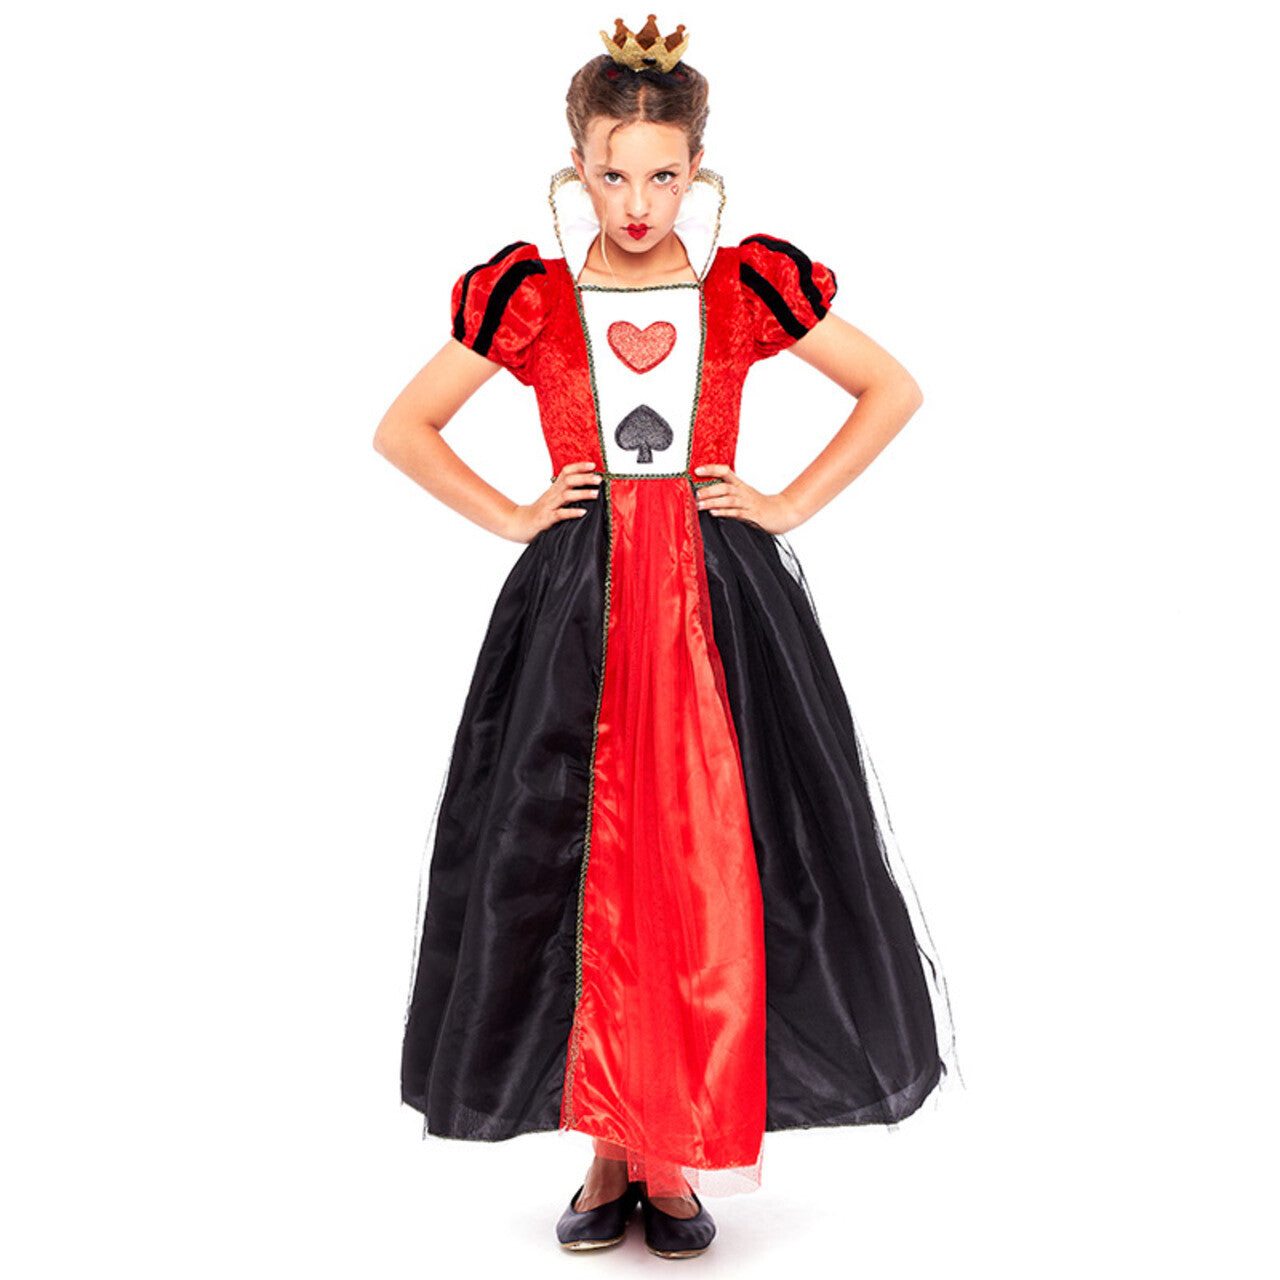 Acqusita online costume da Regina di Cuori glamour infantile